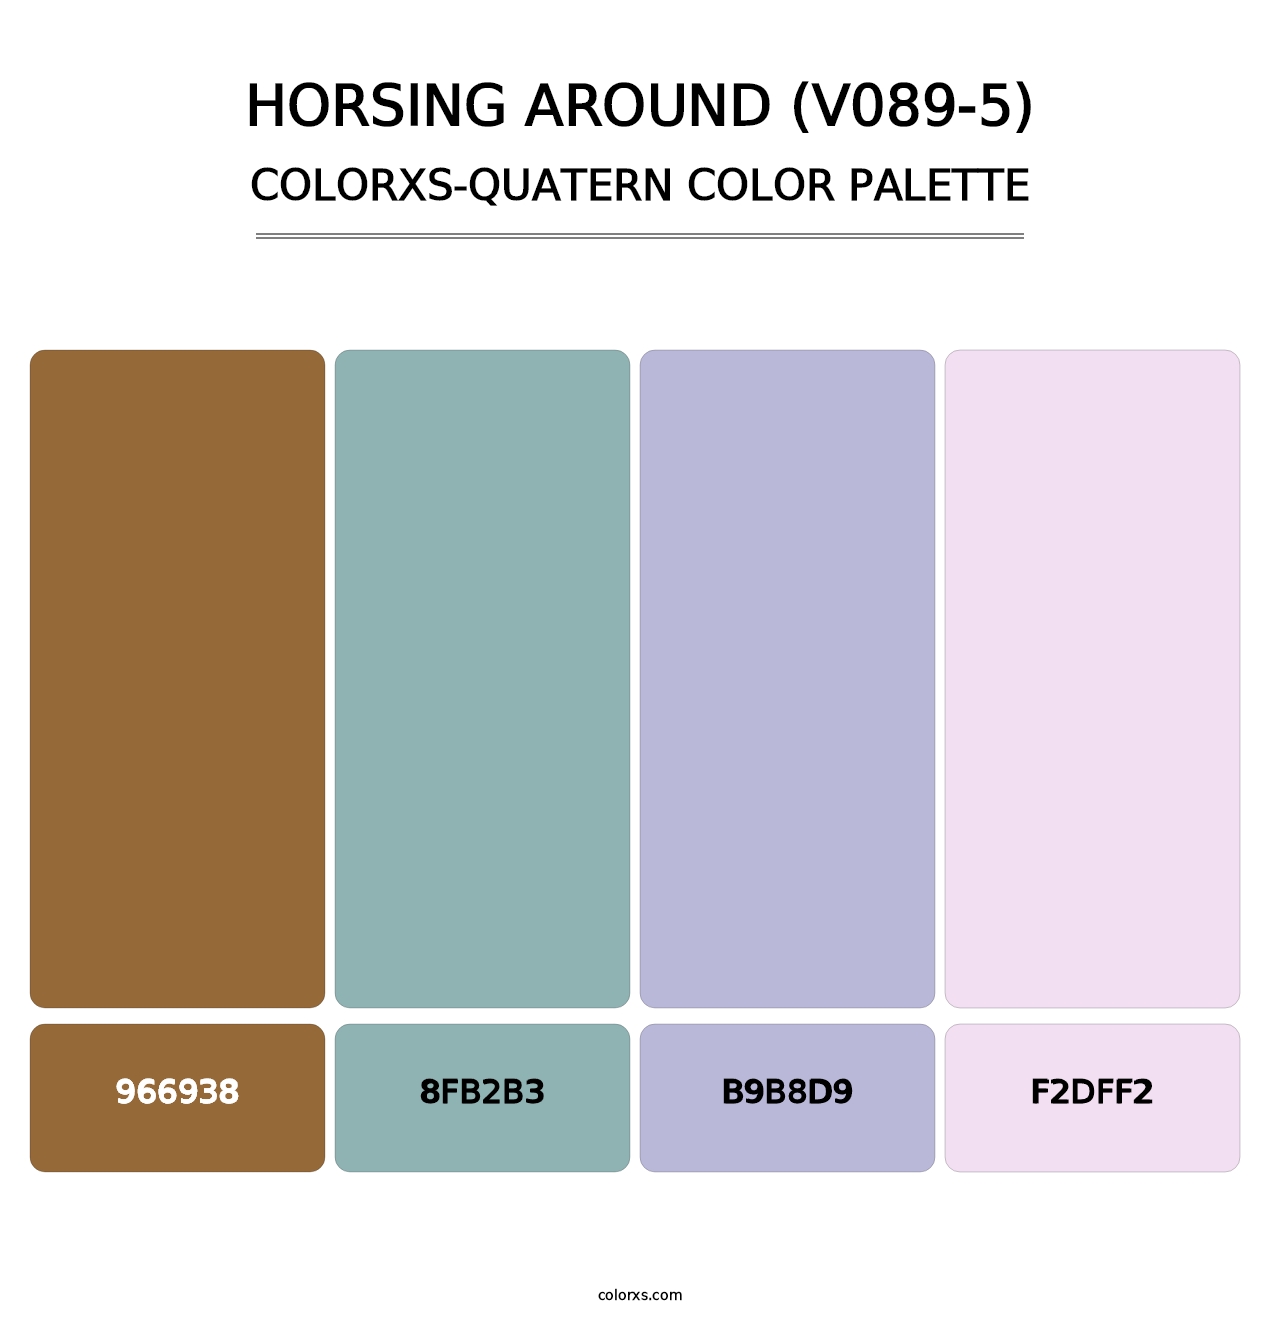 Horsing Around (V089-5) - Colorxs Quatern Palette